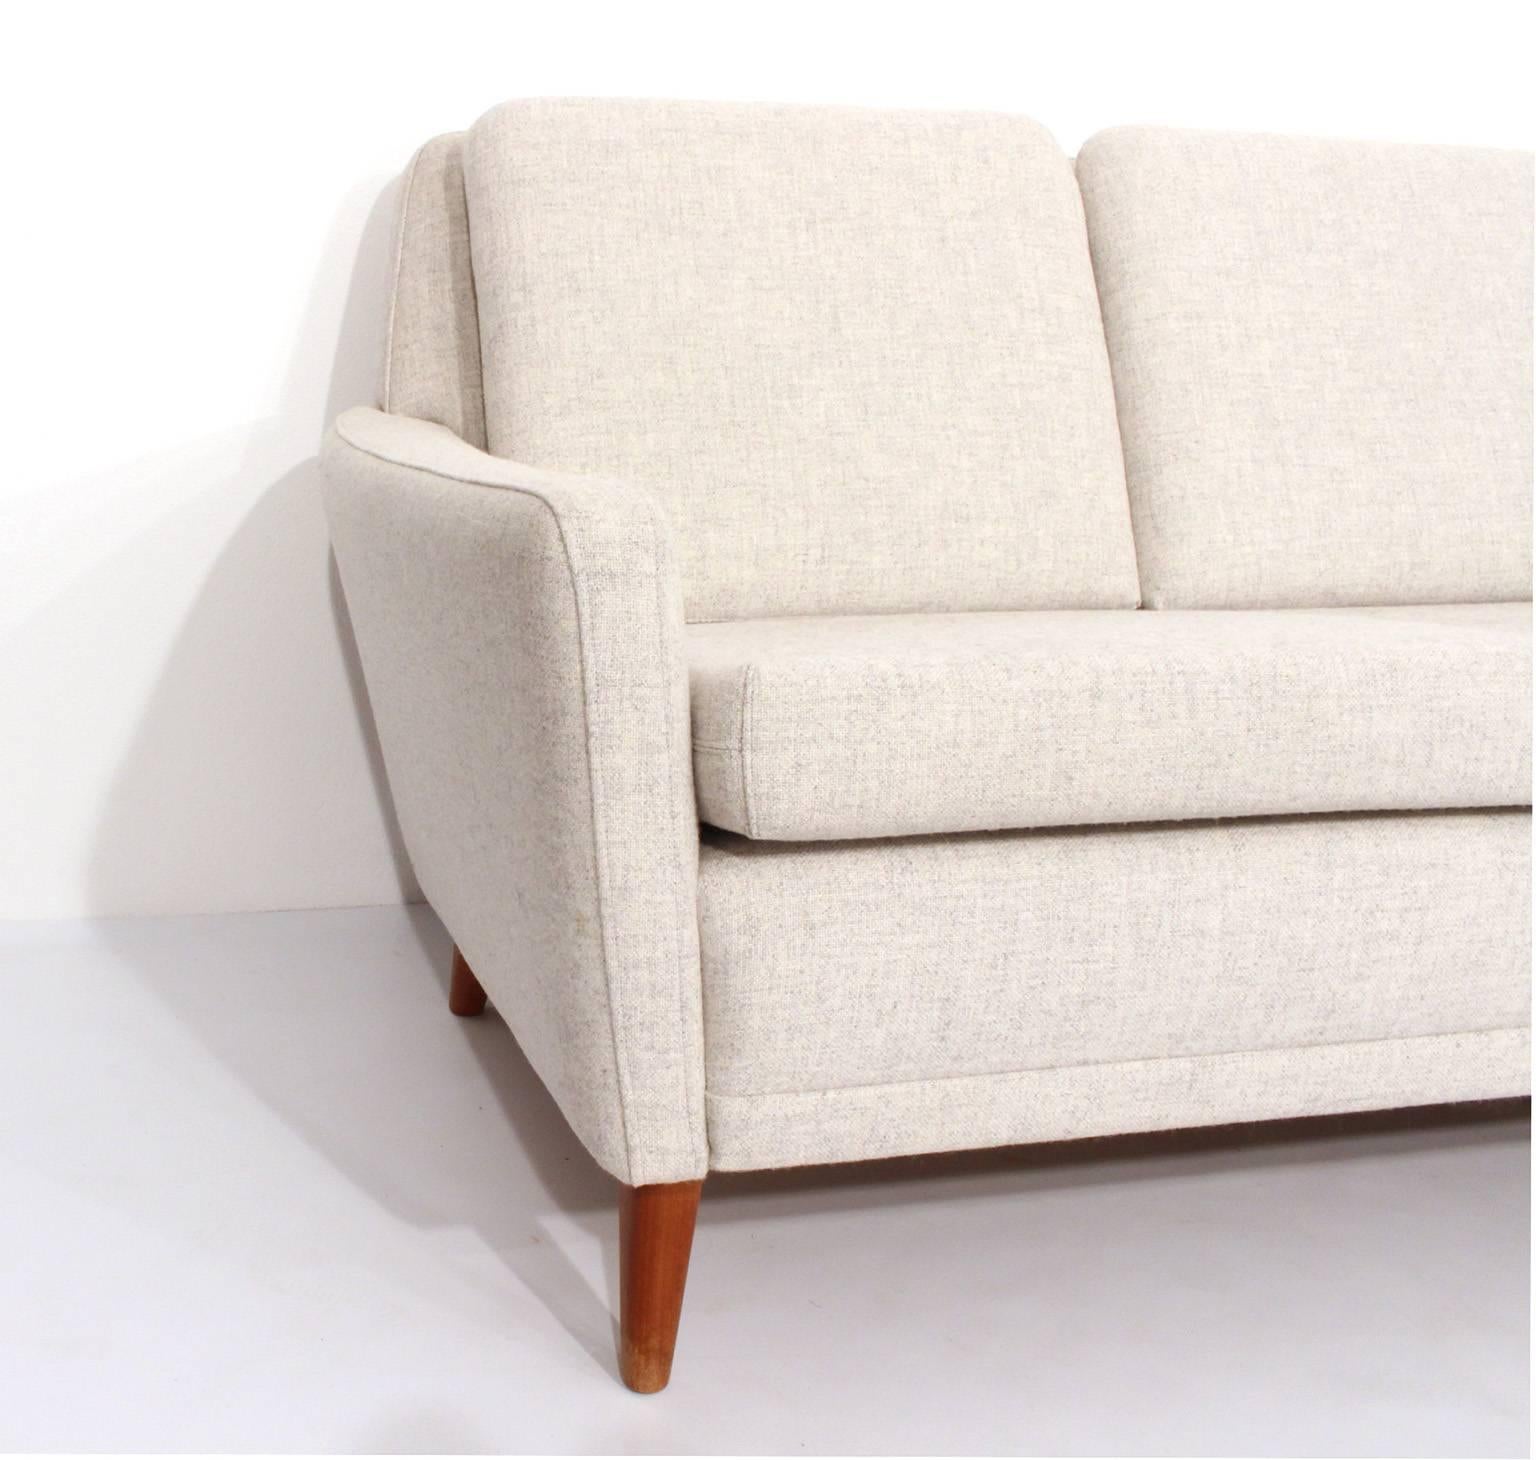 Midcentury four-set sofa, design Folke Ohlsson for DUX, Sweden.

Completely restored and reupholstered in Kvadrat fabric in 2014.